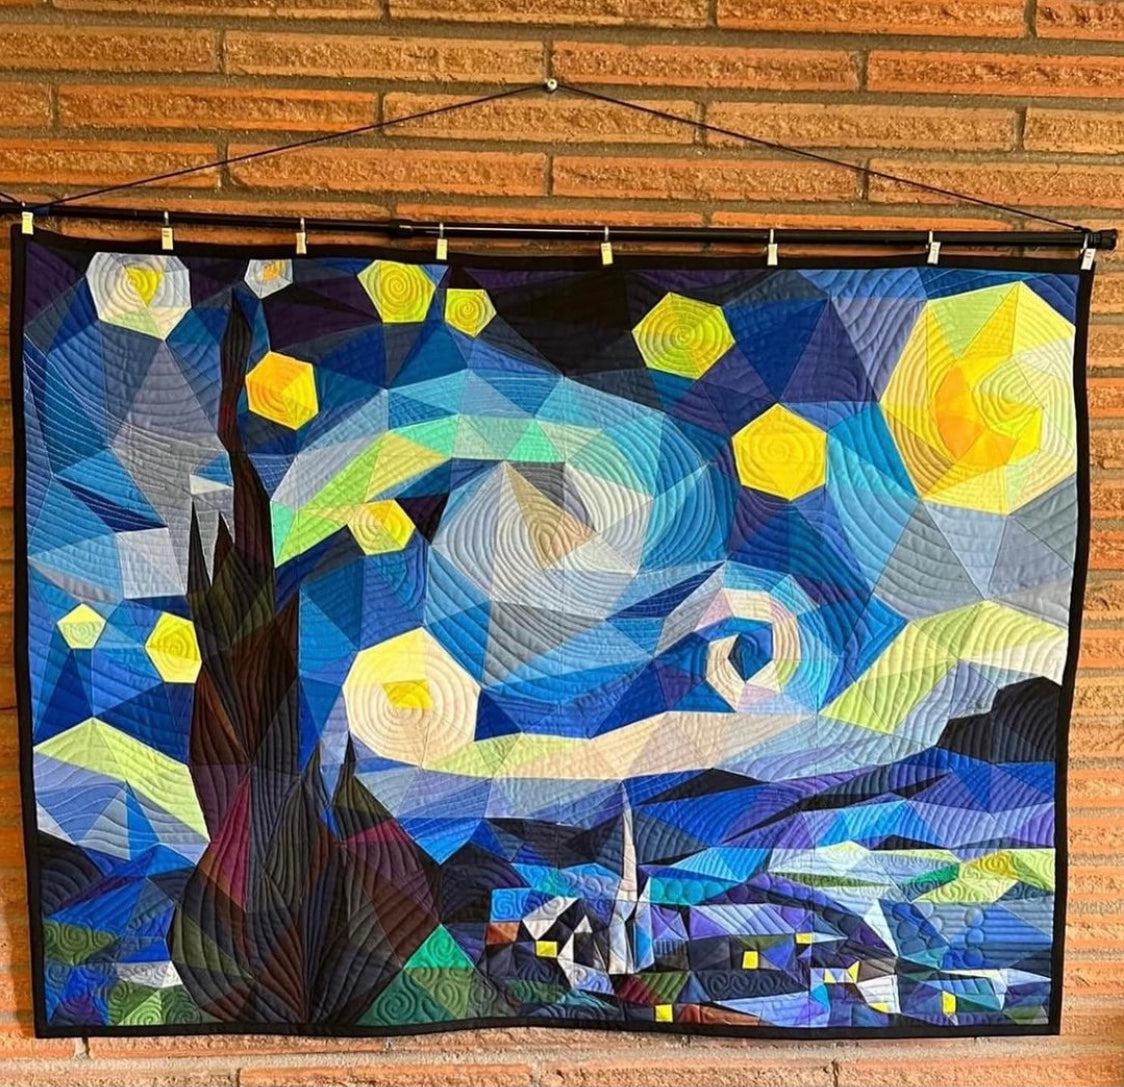 Starry Night Full Quilt Kit-Legit Kits-My Favorite Quilt Store